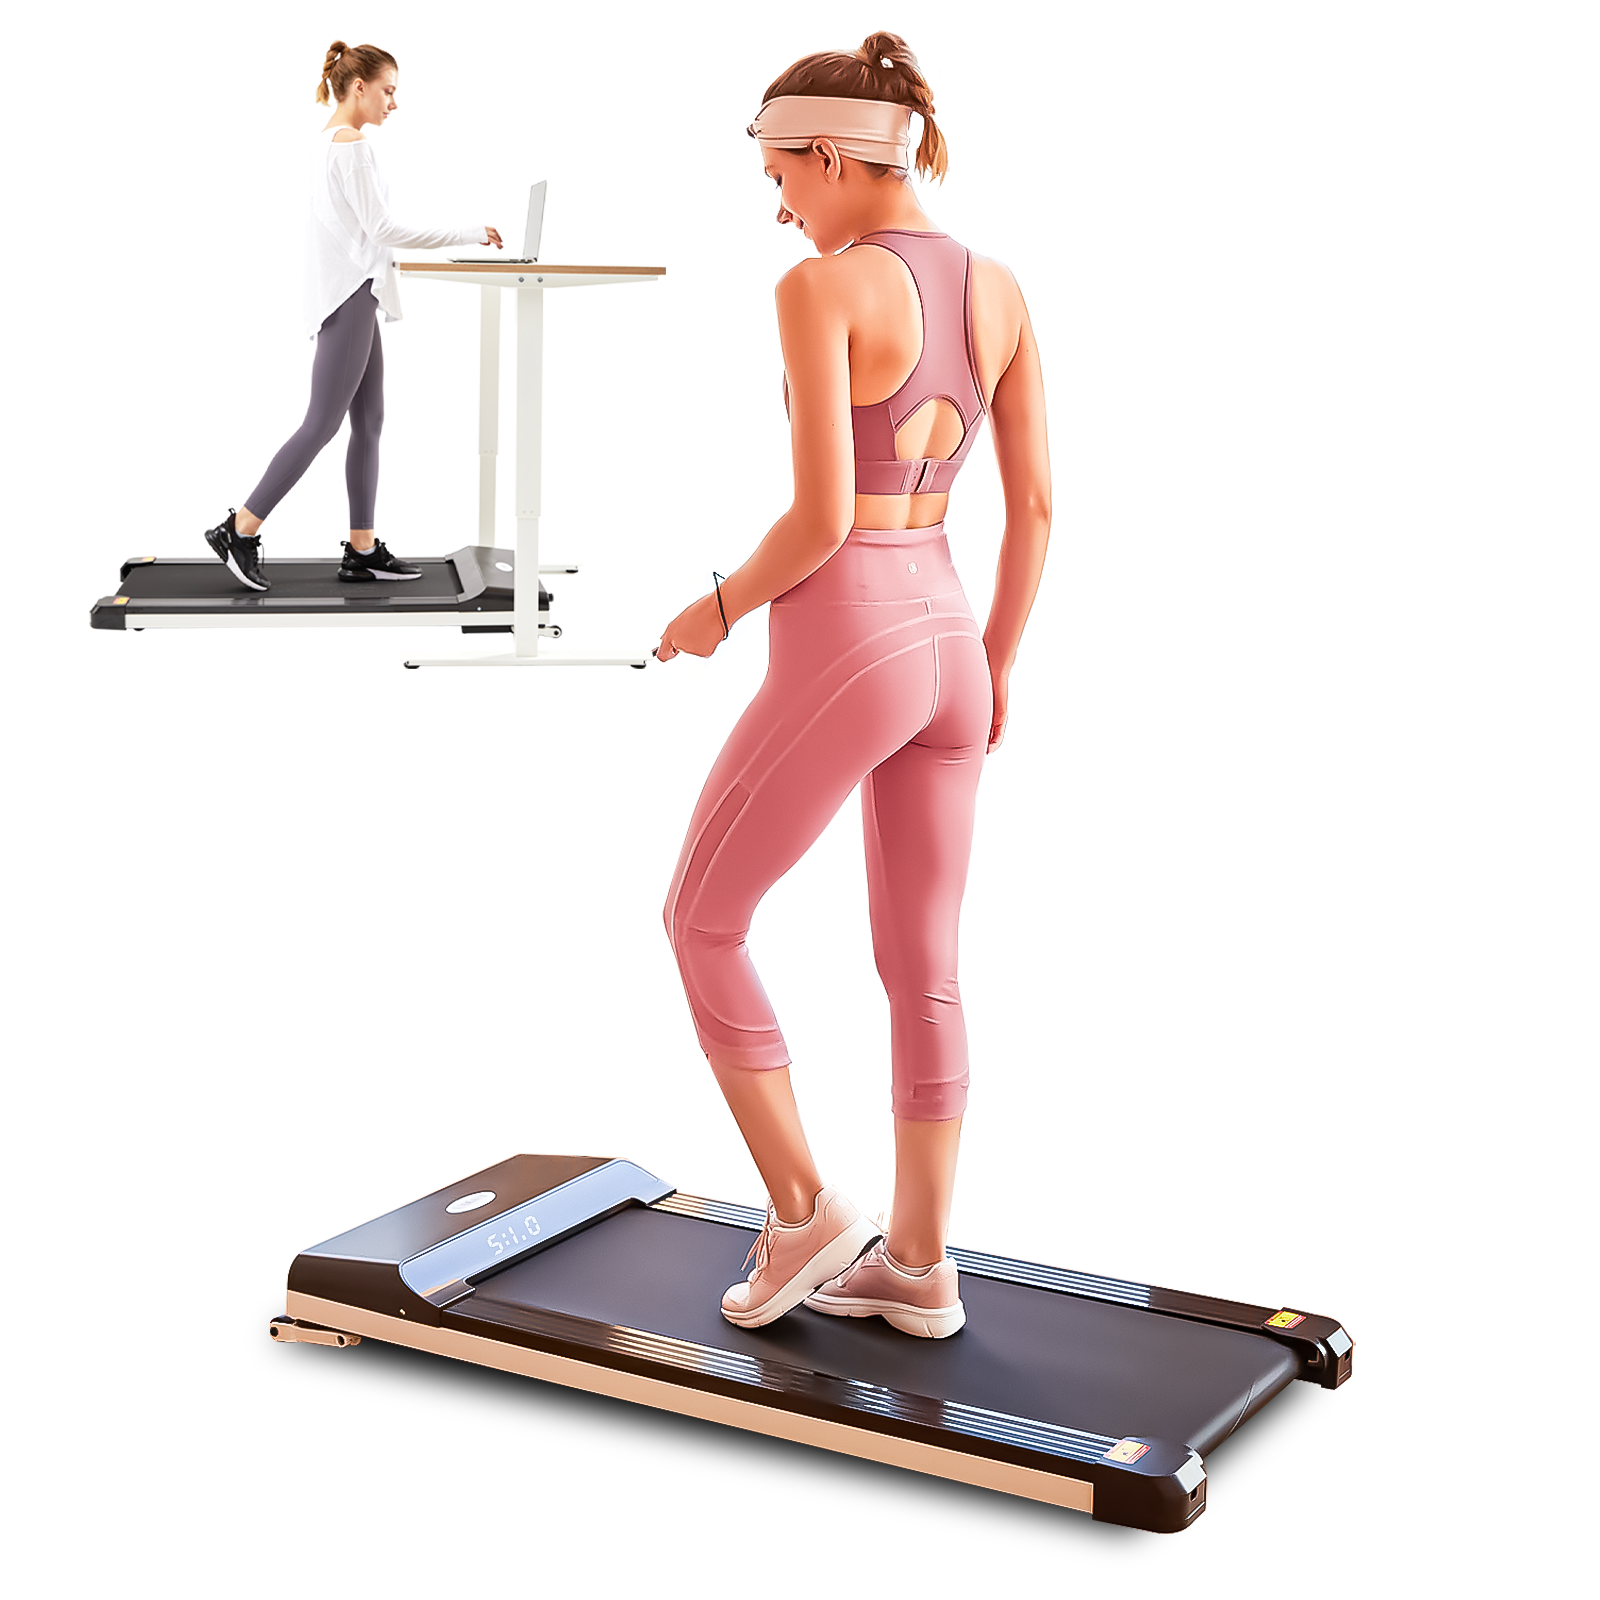 UMAY Walking Pad Treadmill Under Desk Treadmill for Home Office – umay_us